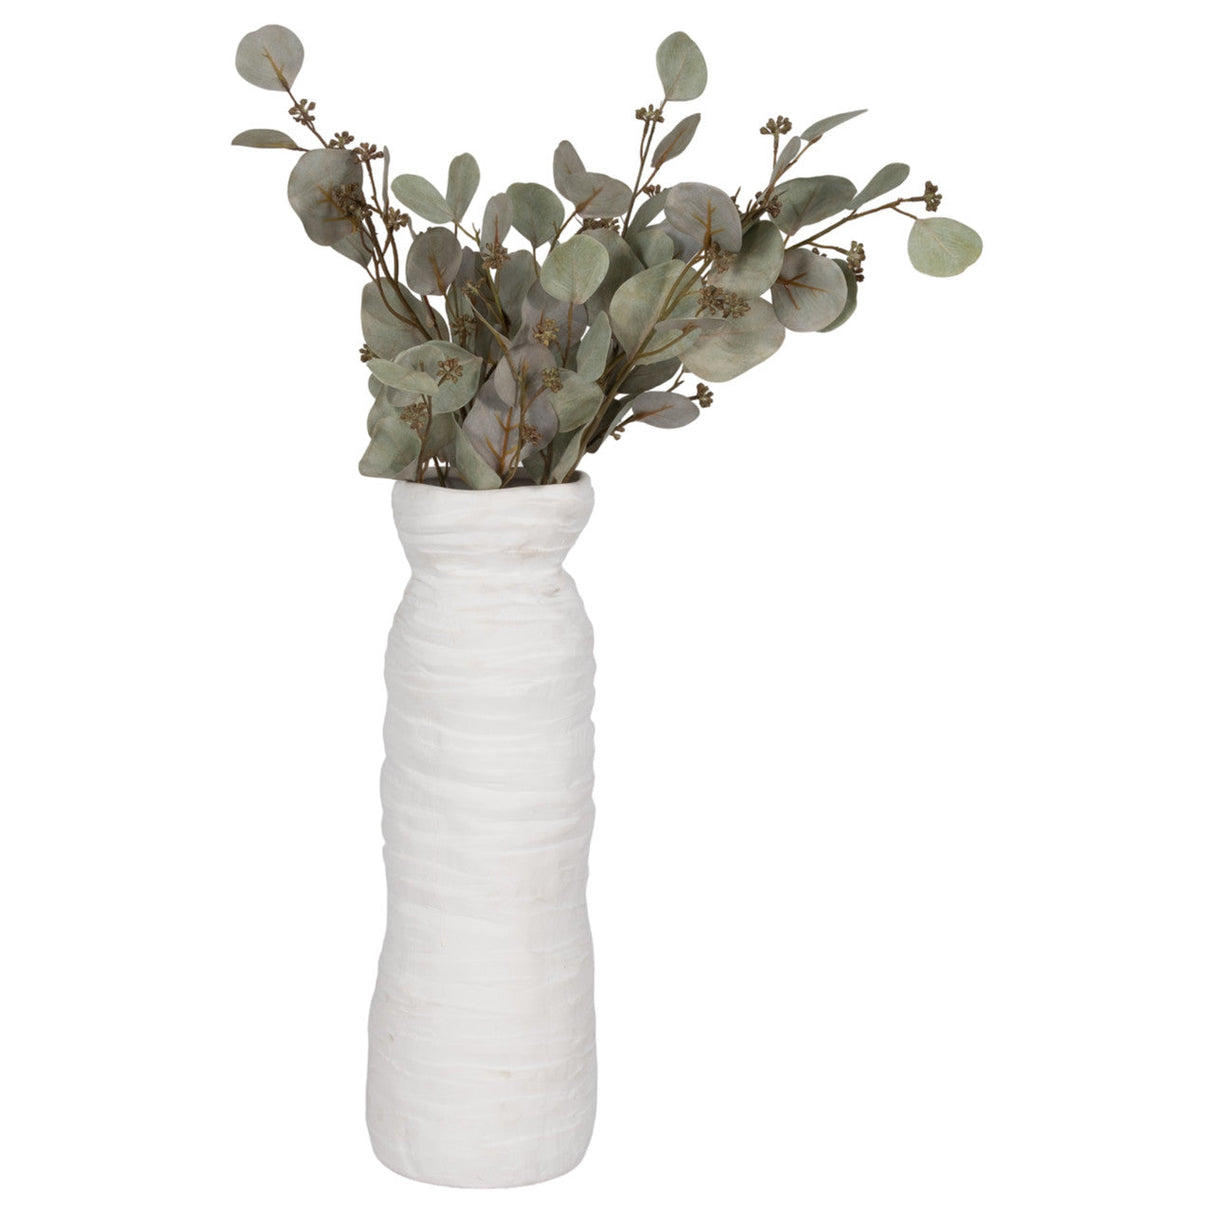 19" Horizontal Ribbed Matte Vase, Ivory